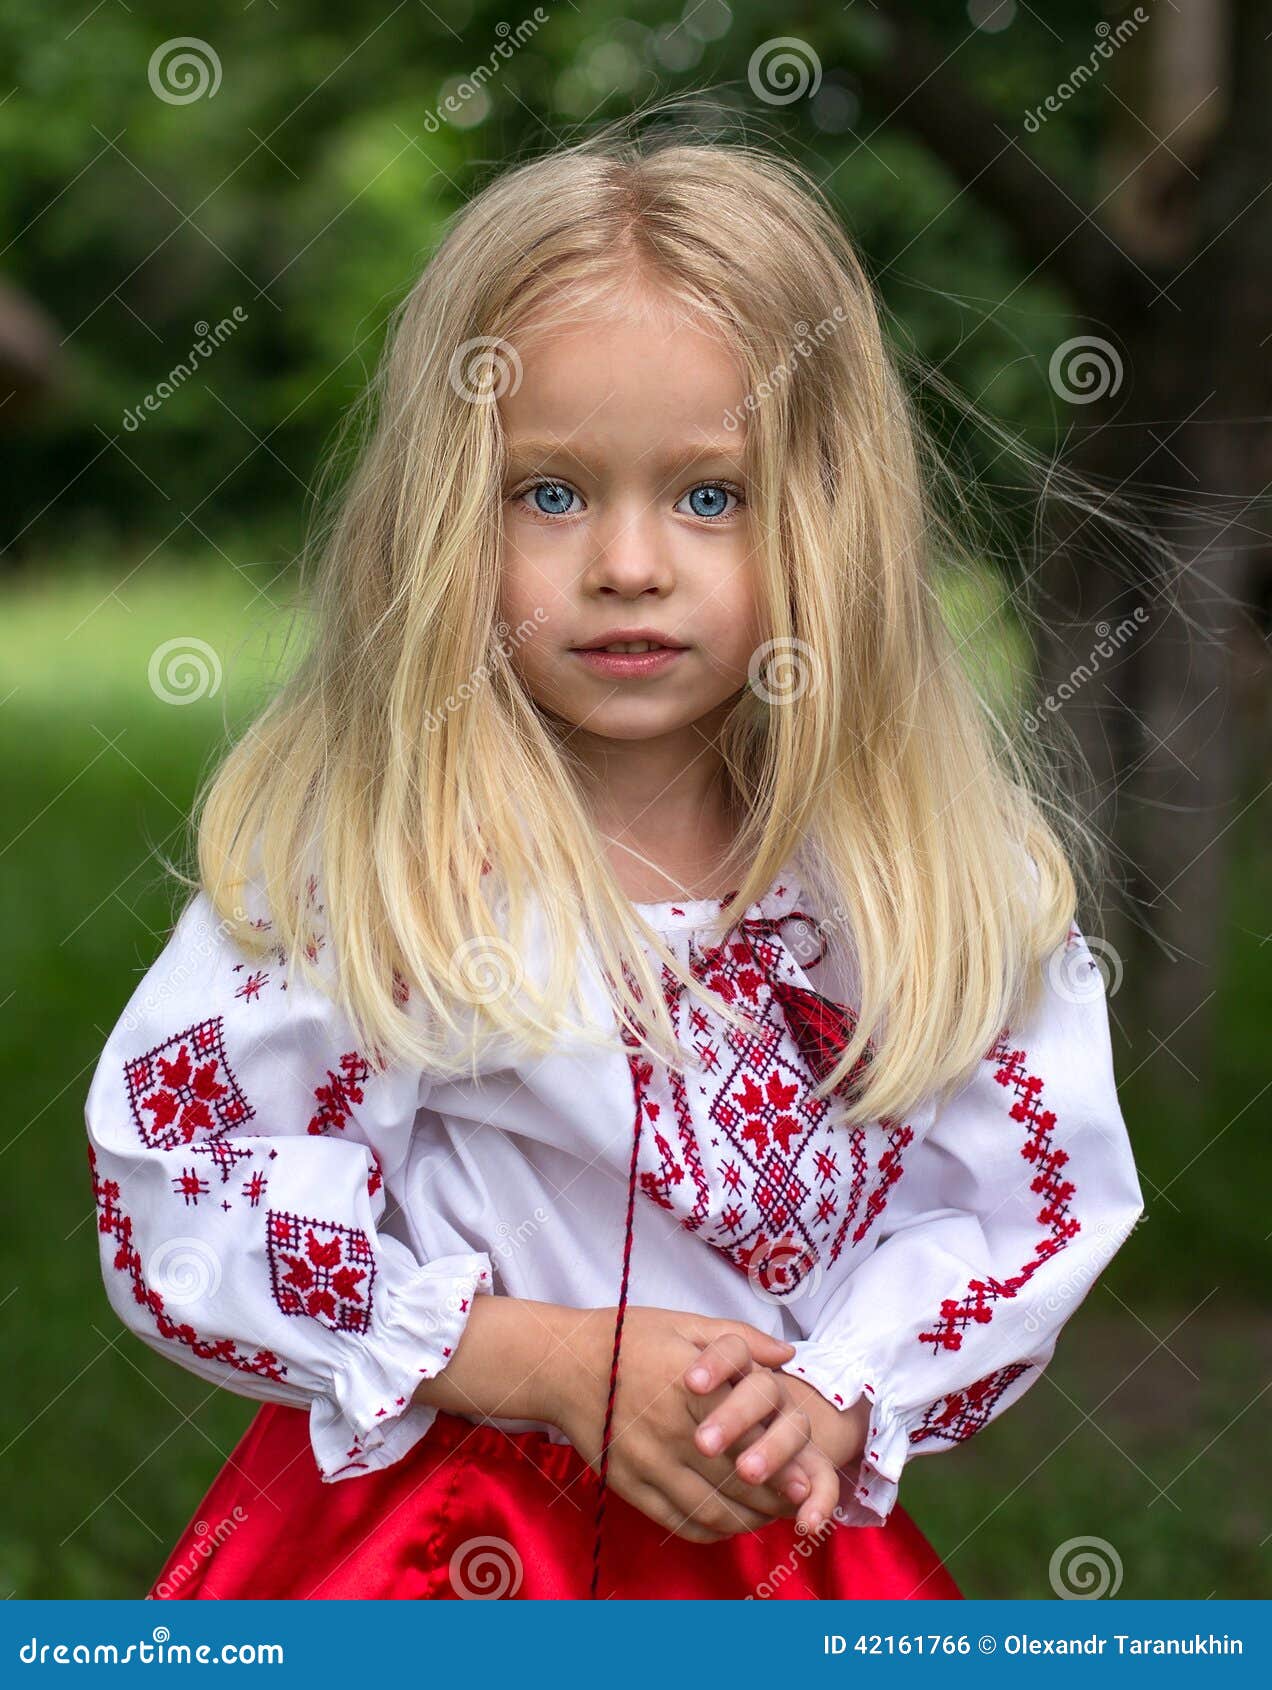 Girl young pics ukraine Purenudism photo